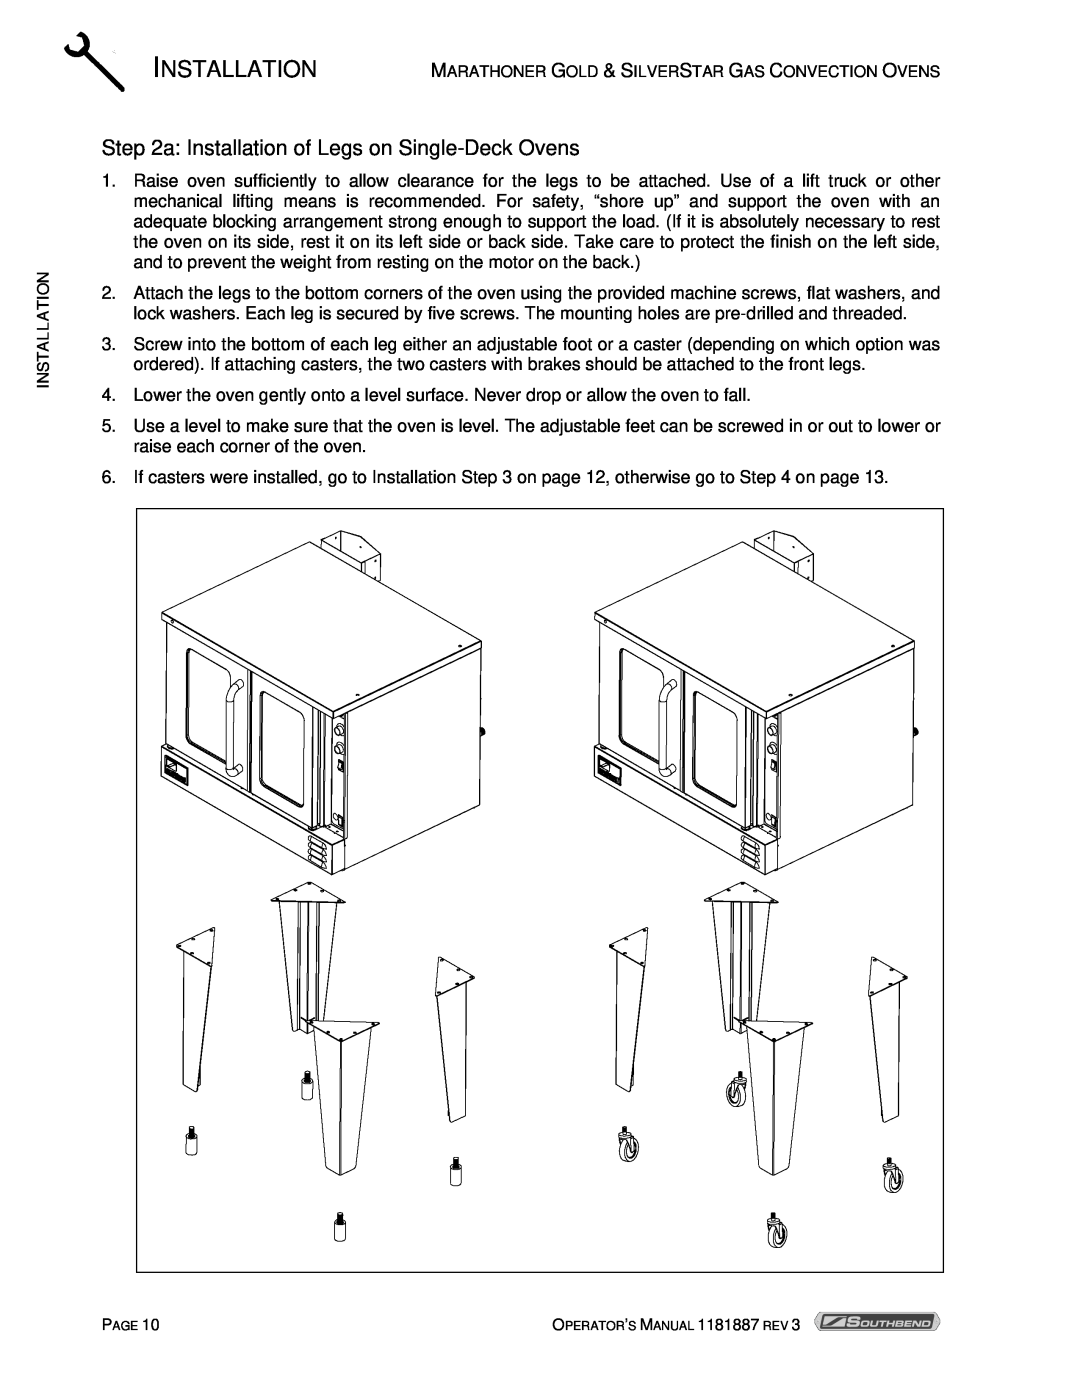 Southbend Marathoner manual a Installation of Legs on Single-Deck Ovens 